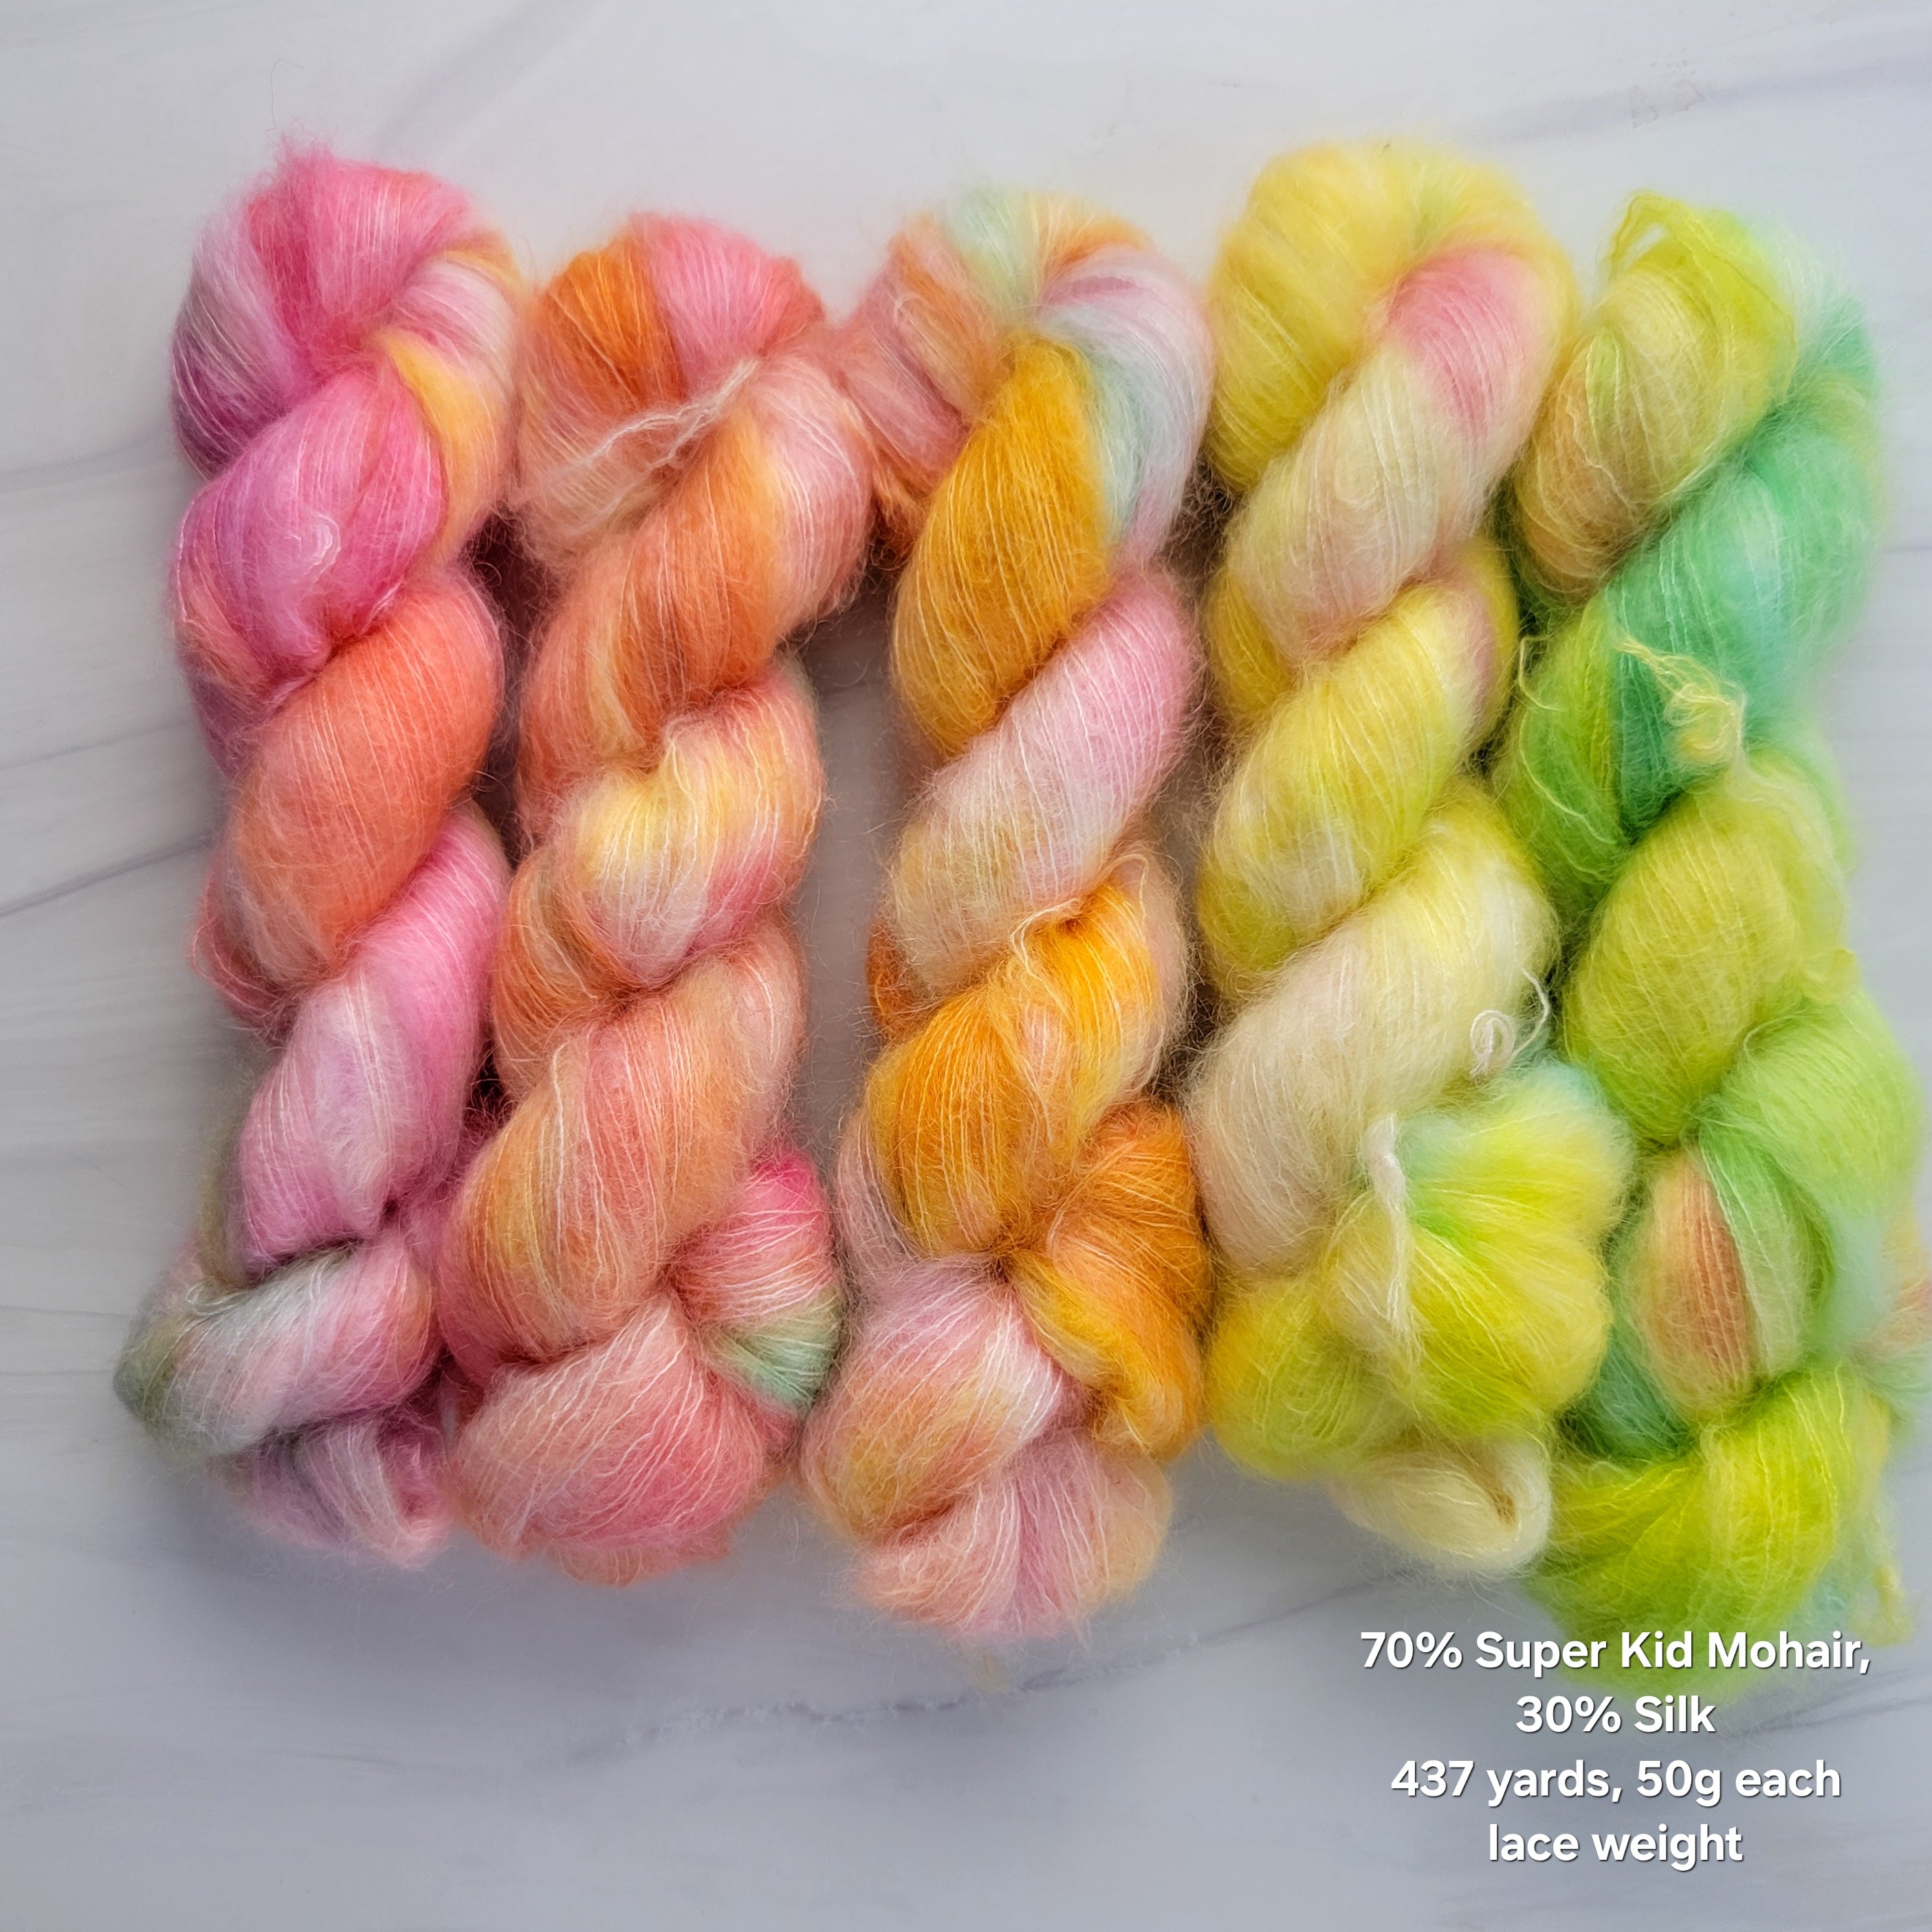 SALE lot - Ready to ship yarn - SW Merino DK weight yarn - 100g each